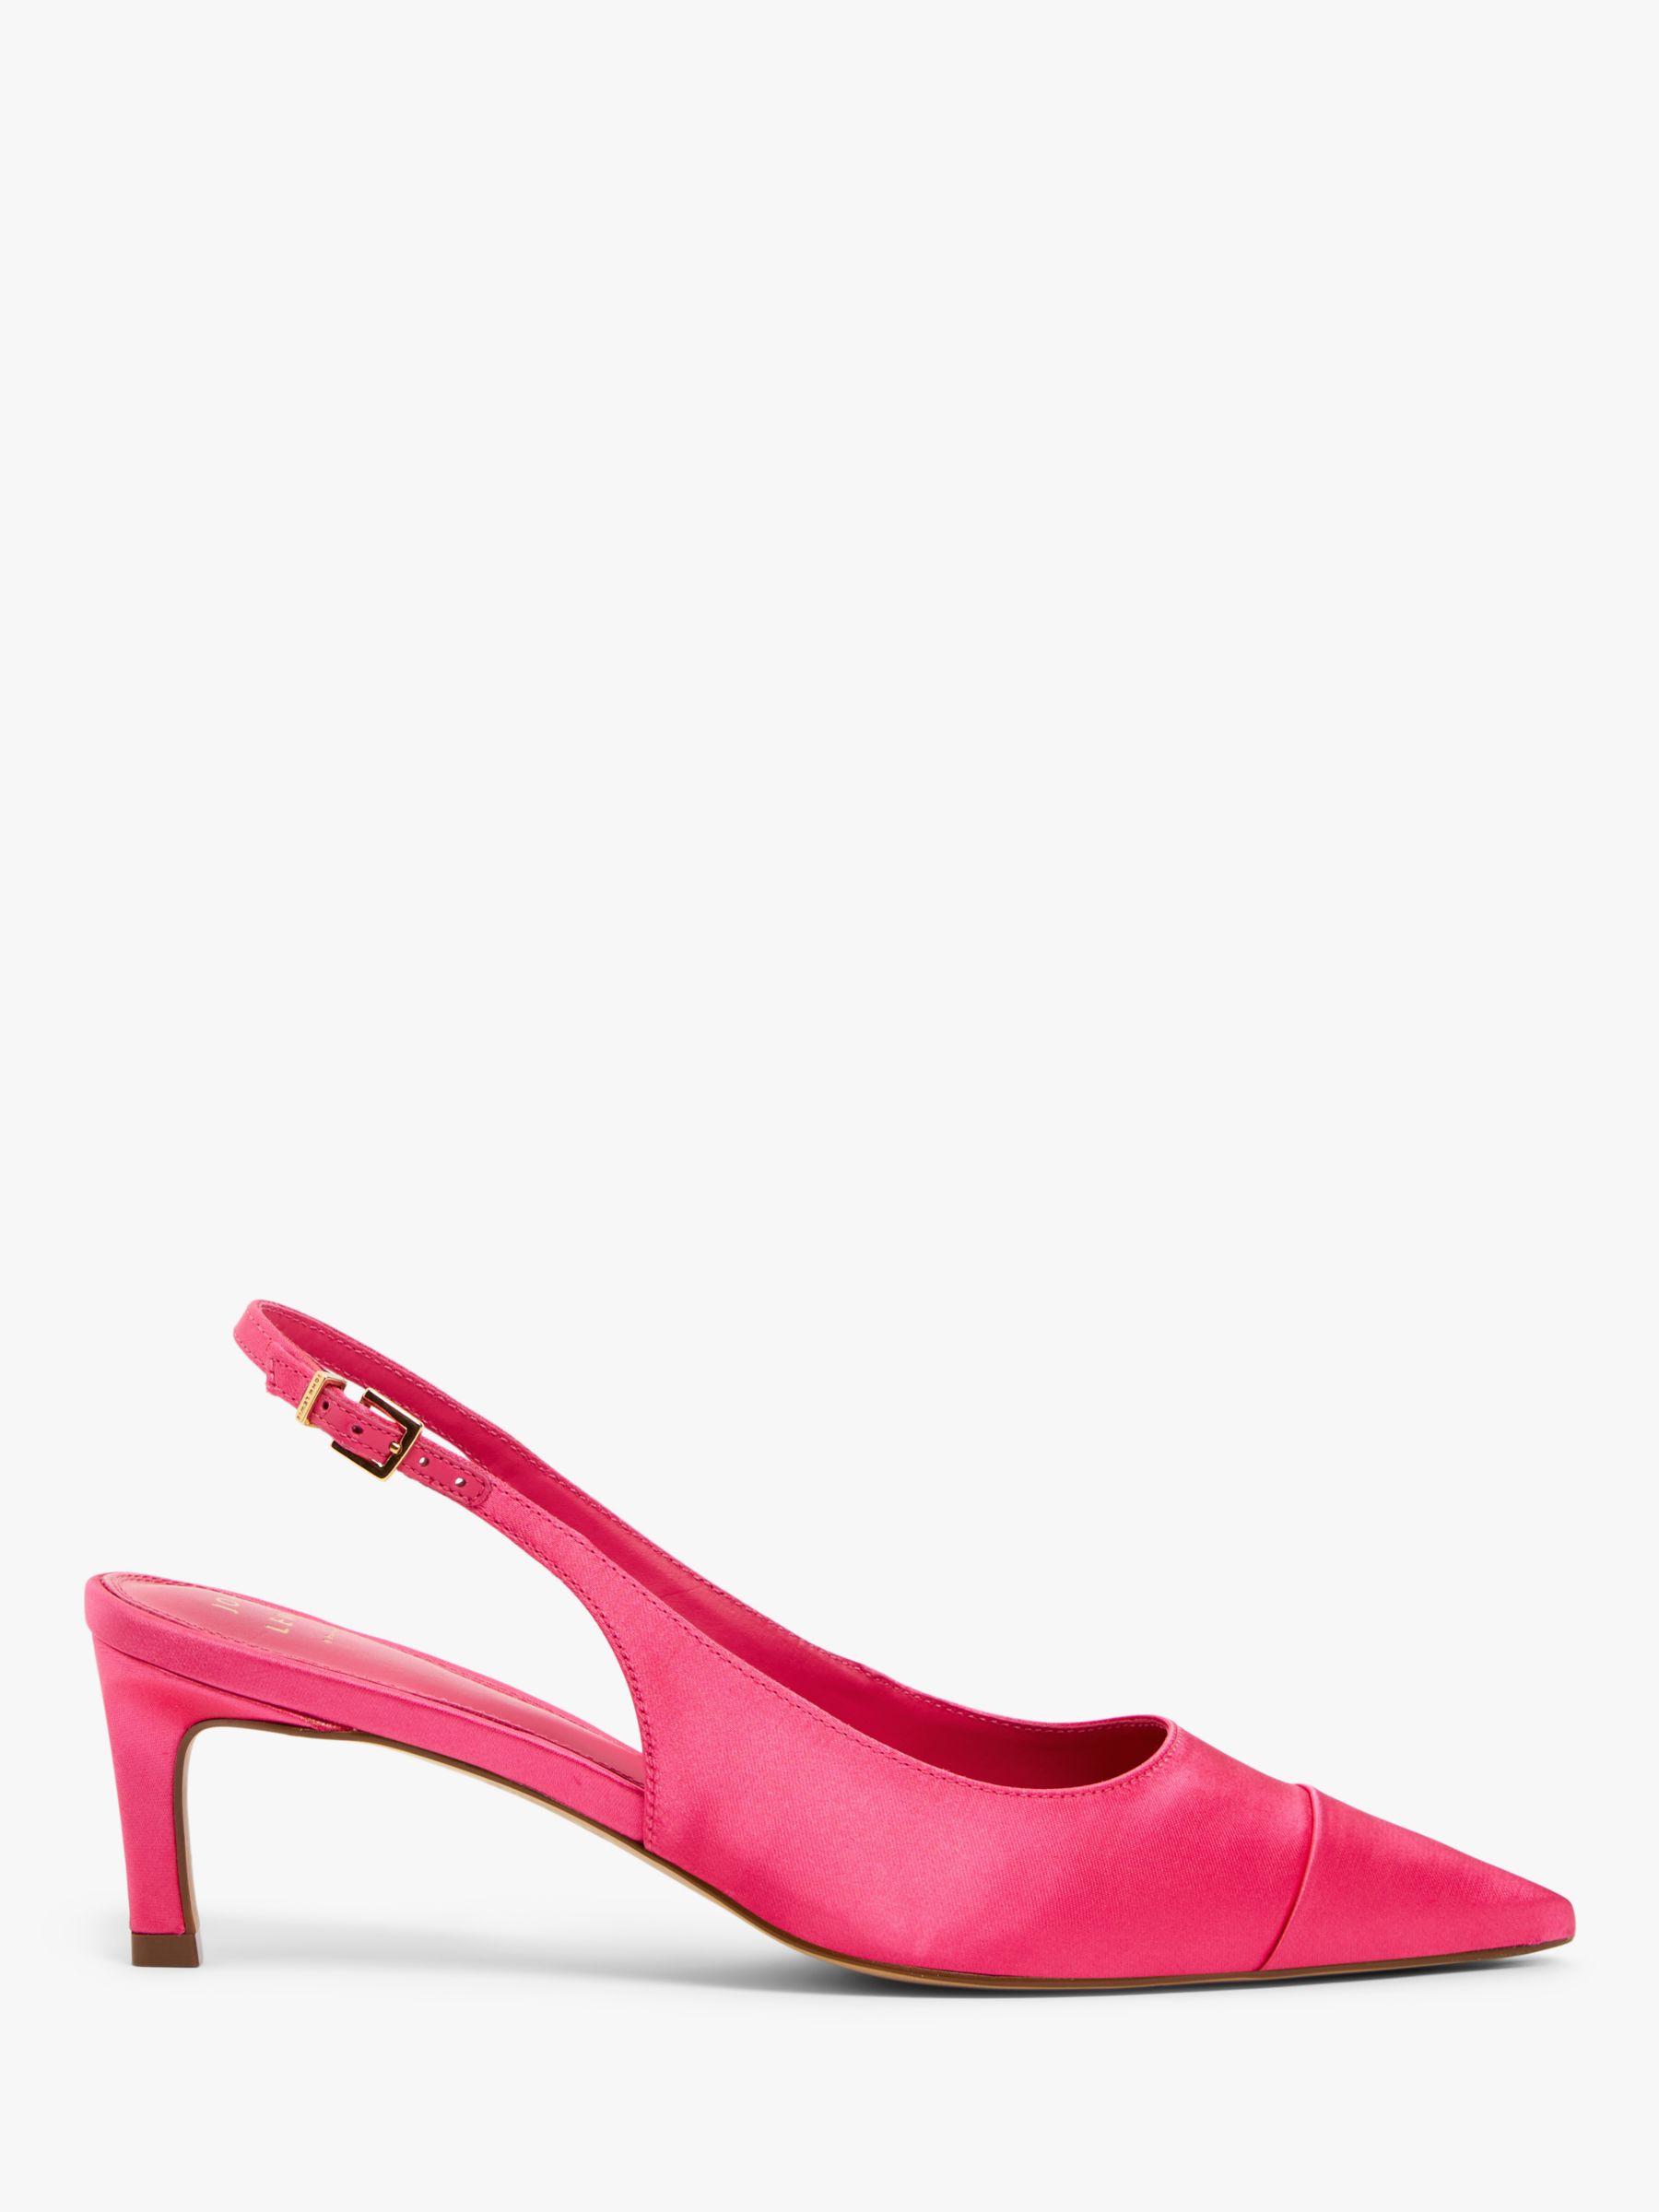 John Lewis Bijou Satin Toe Cap Pointed Slingback Open Court Shoes, Hot Pink, 4